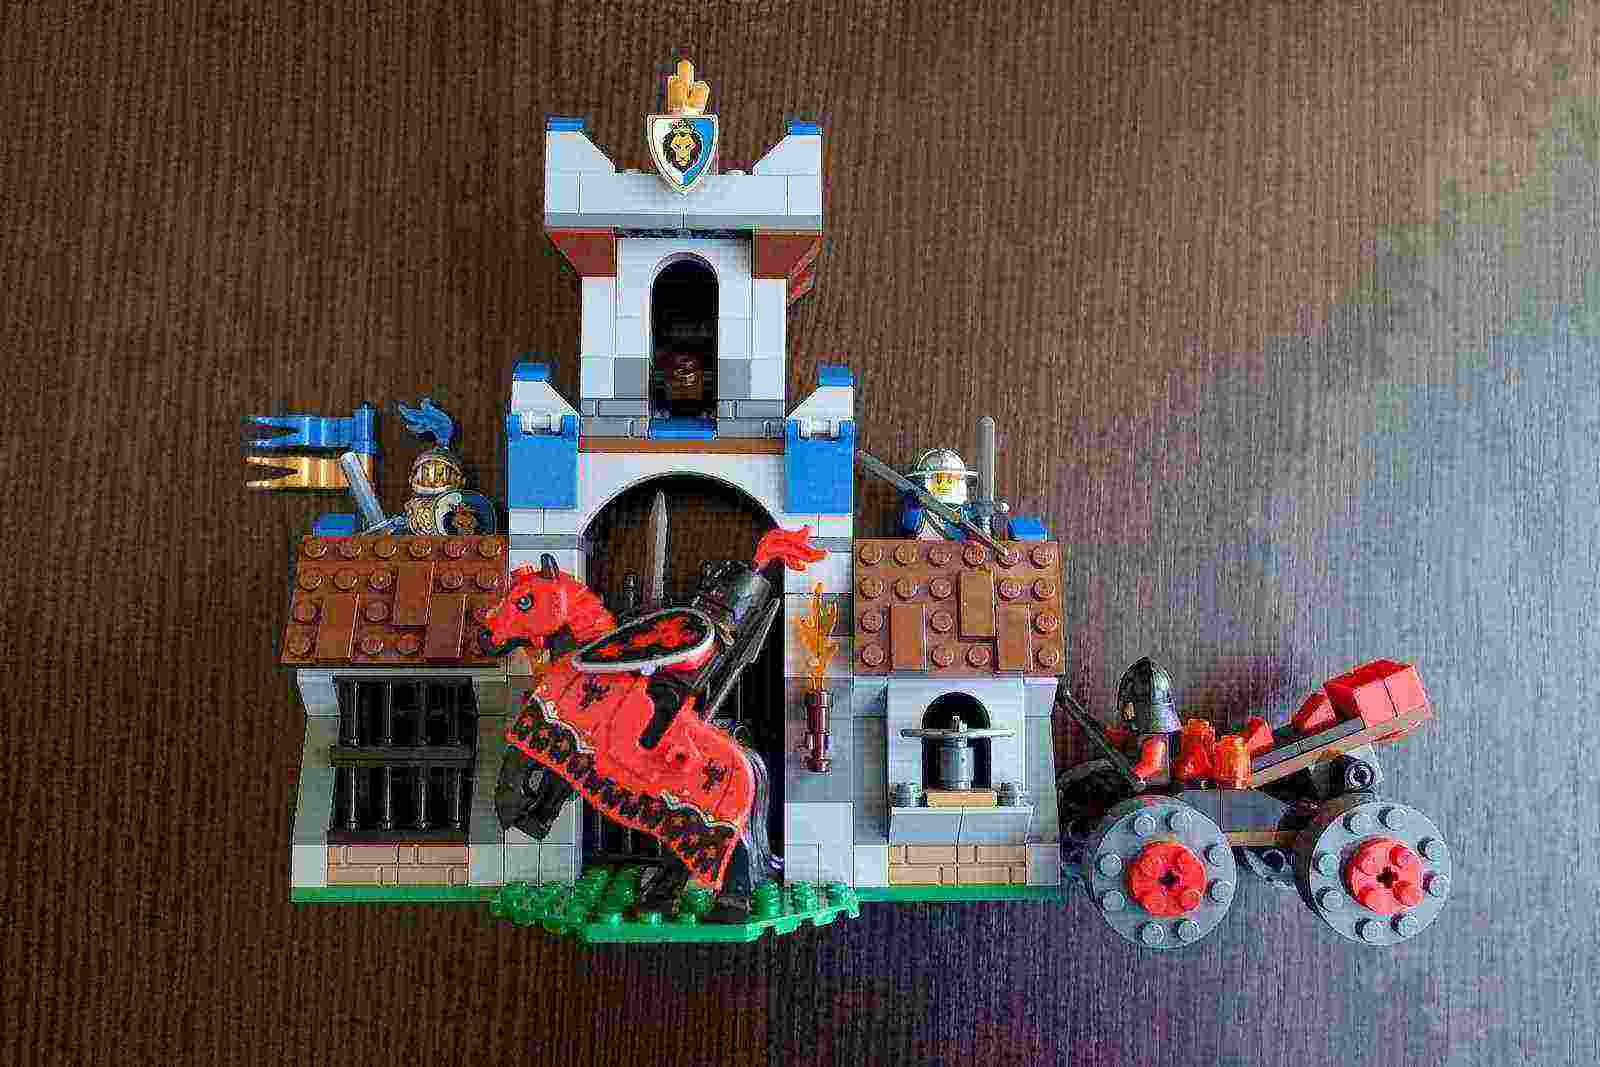 LEGO Castle: The Gatehouse Raid